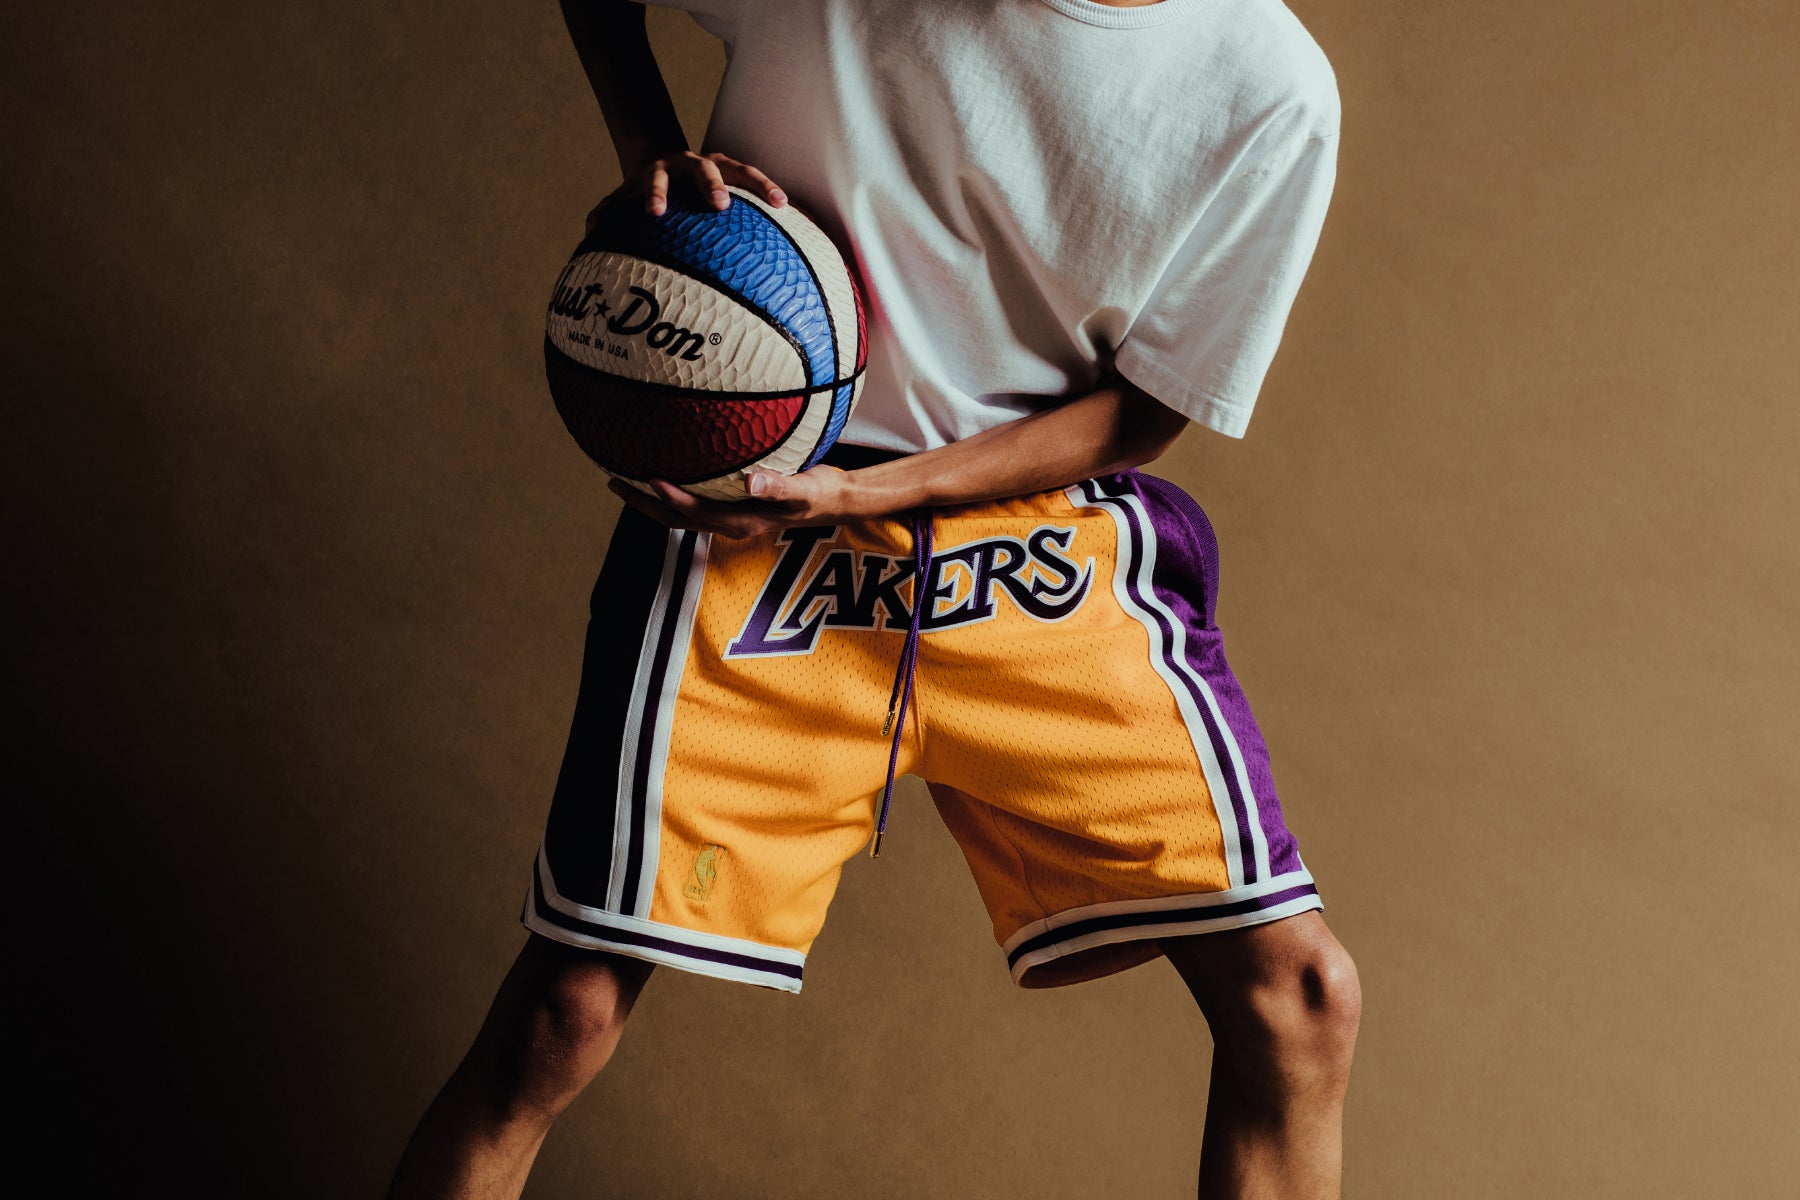 100% Authentic Bape Mitchell & Ness Lakers Warm Up Jacket size: XL